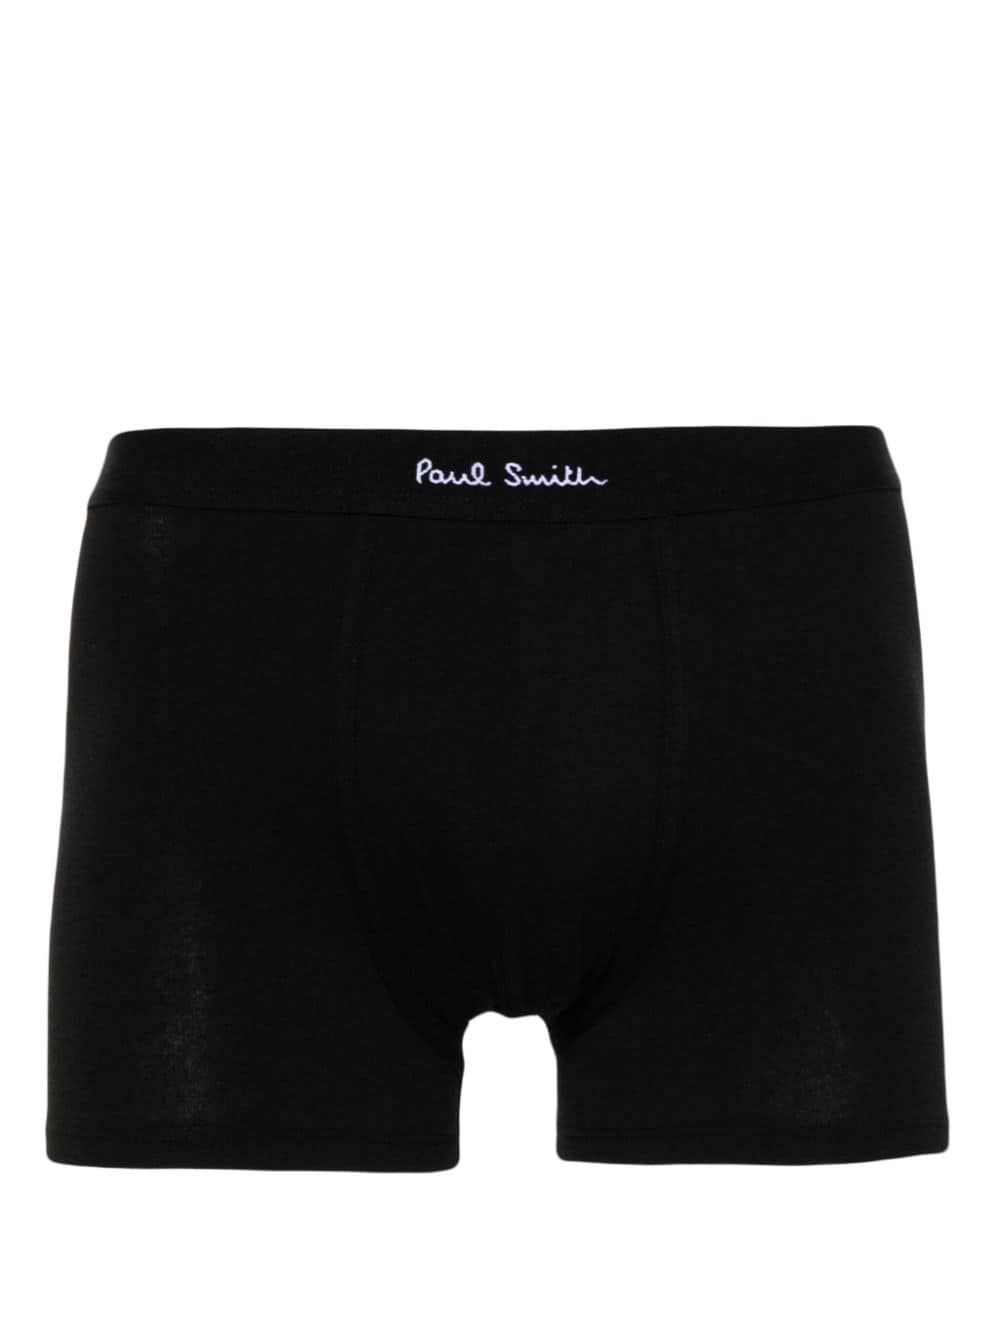 Paul Smith Underwear Black